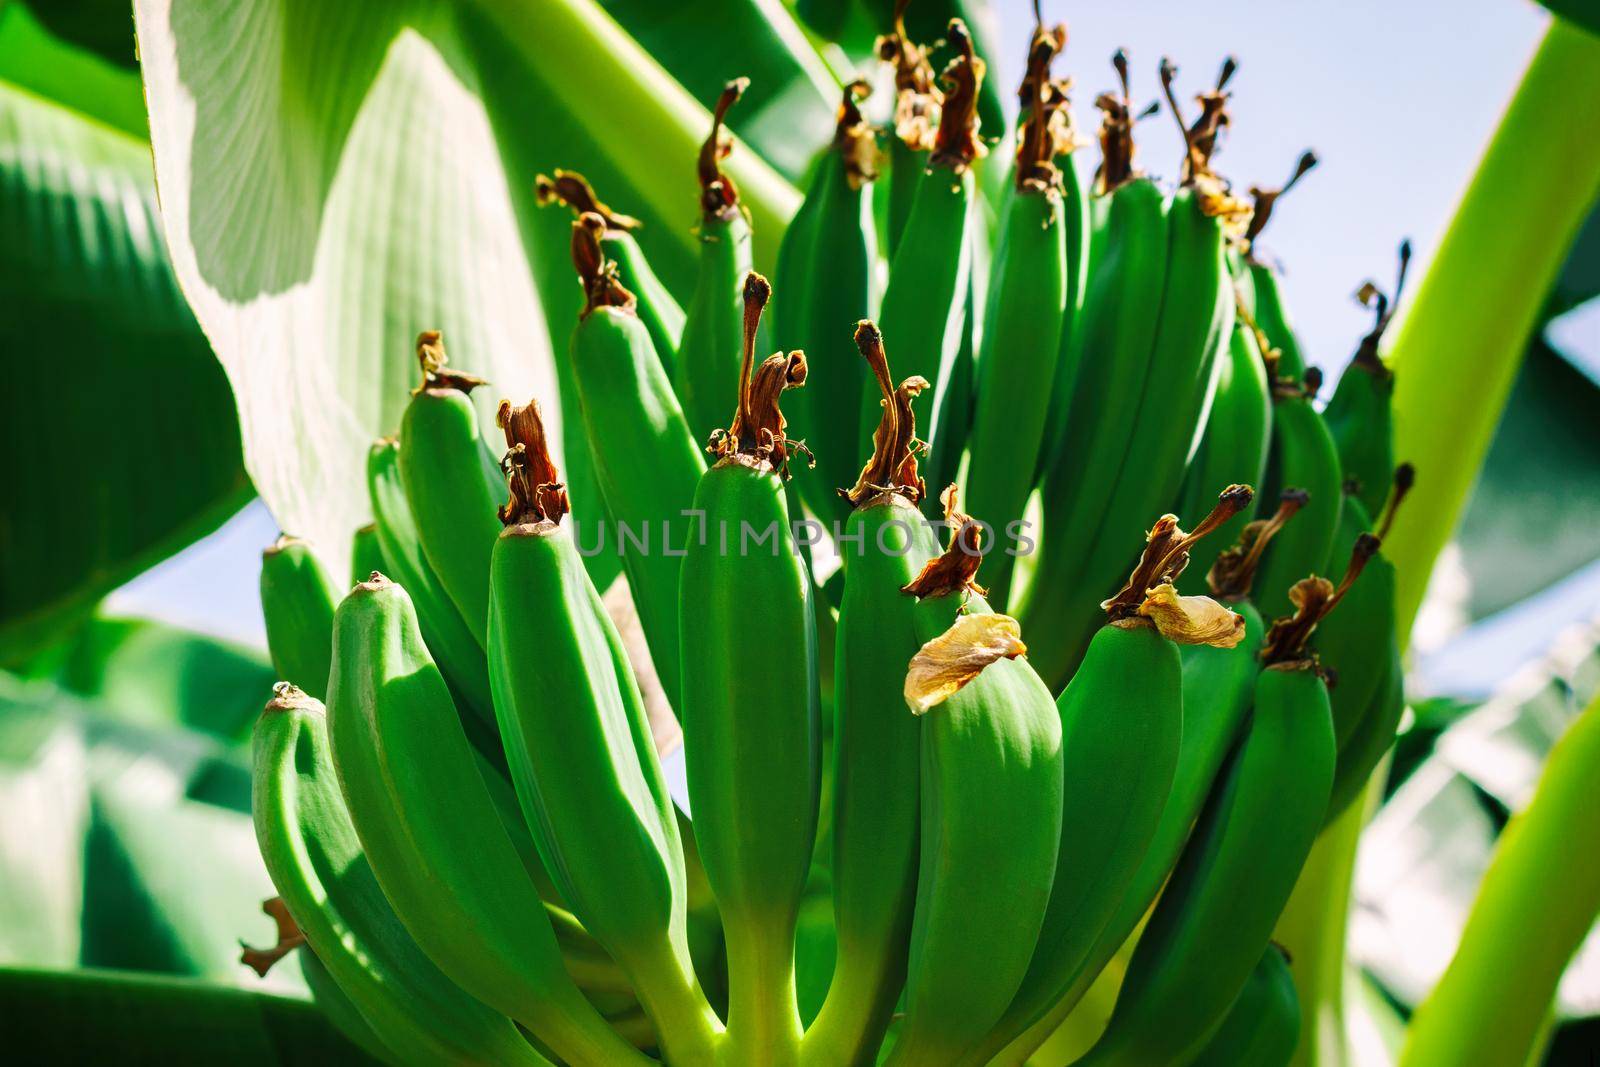 Unripe bananas in the garden close up.